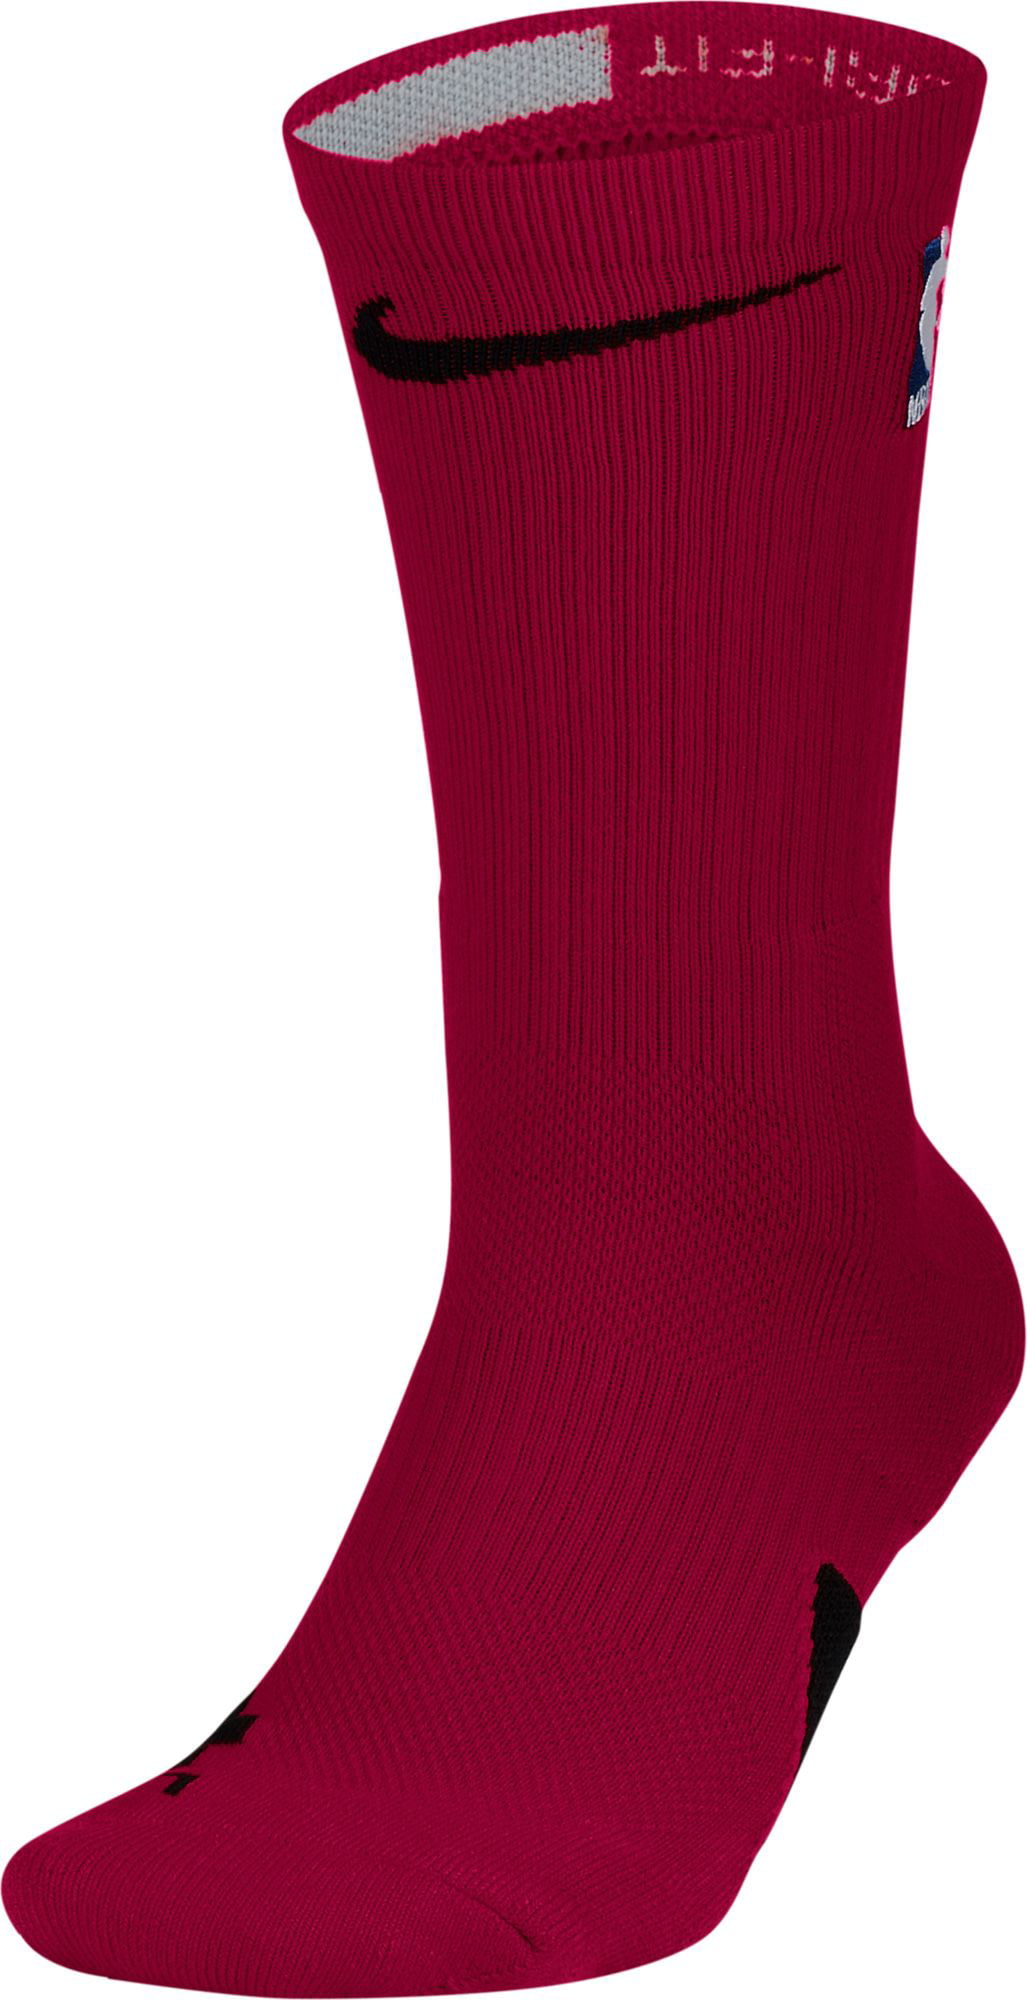 burgundy nike socks